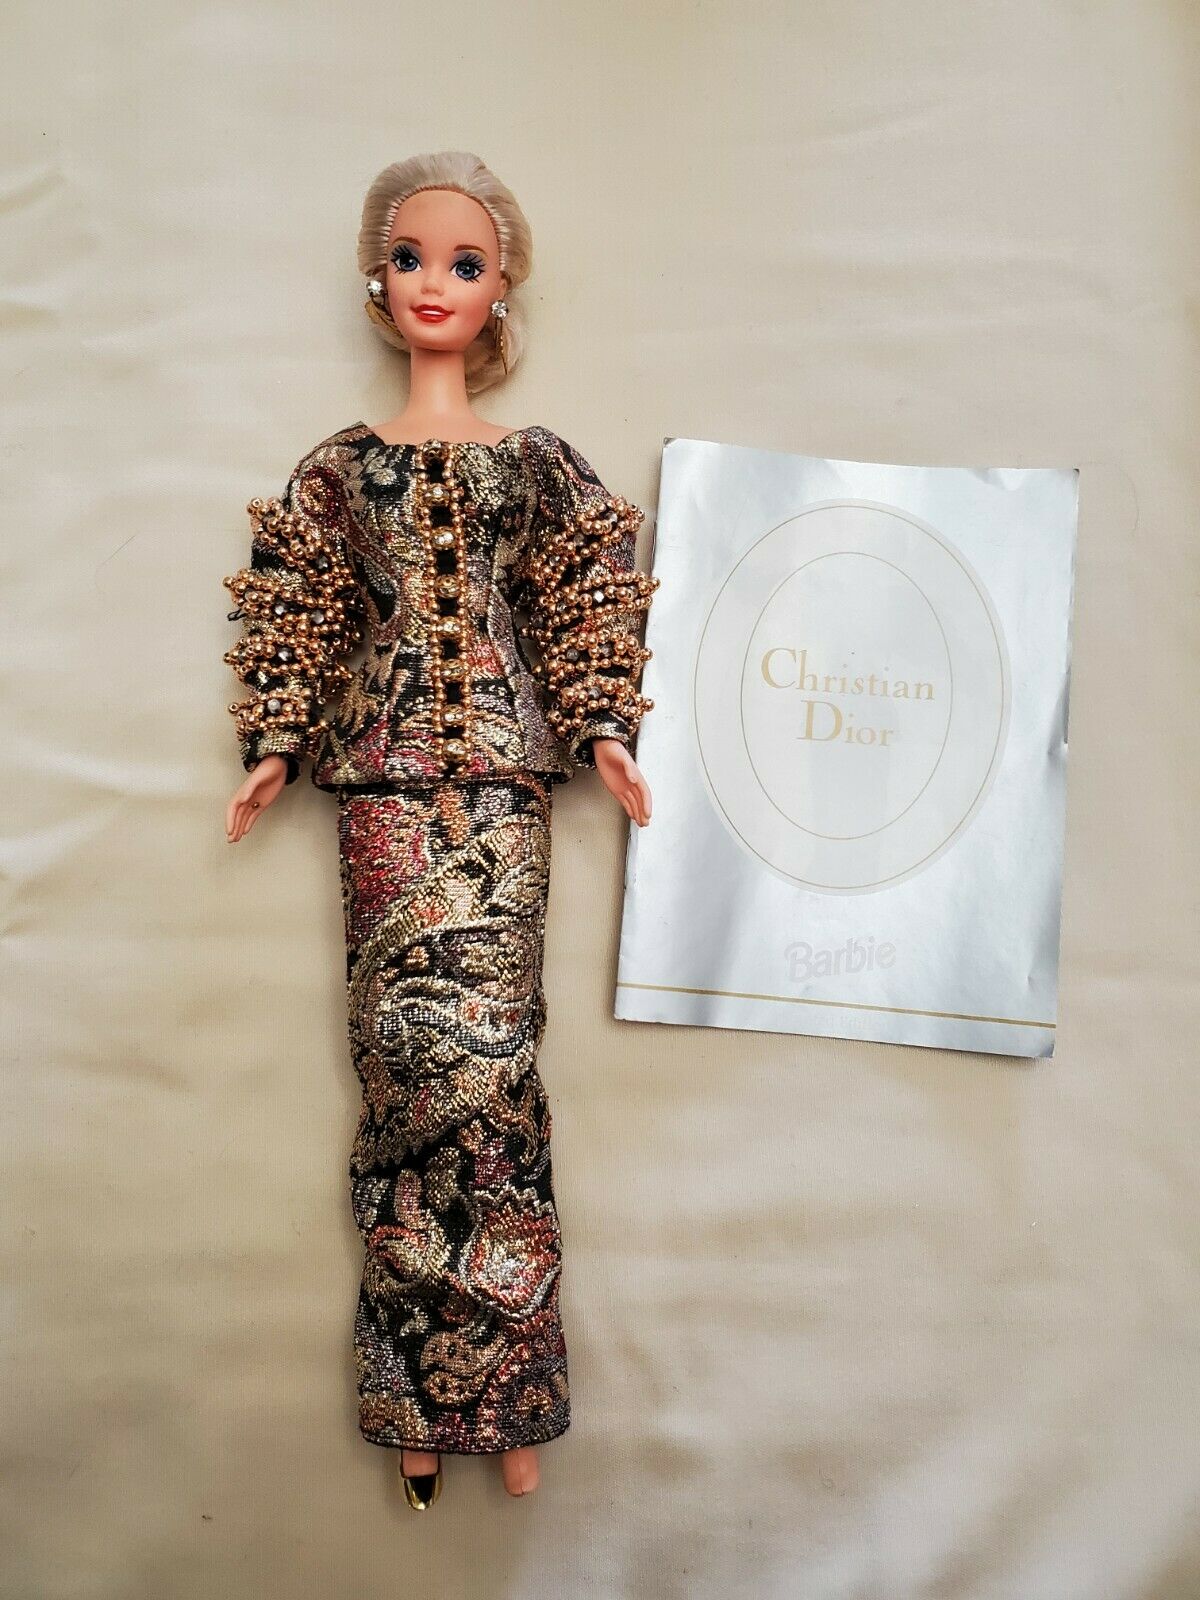 Limited Edition Christian Dior Barbie